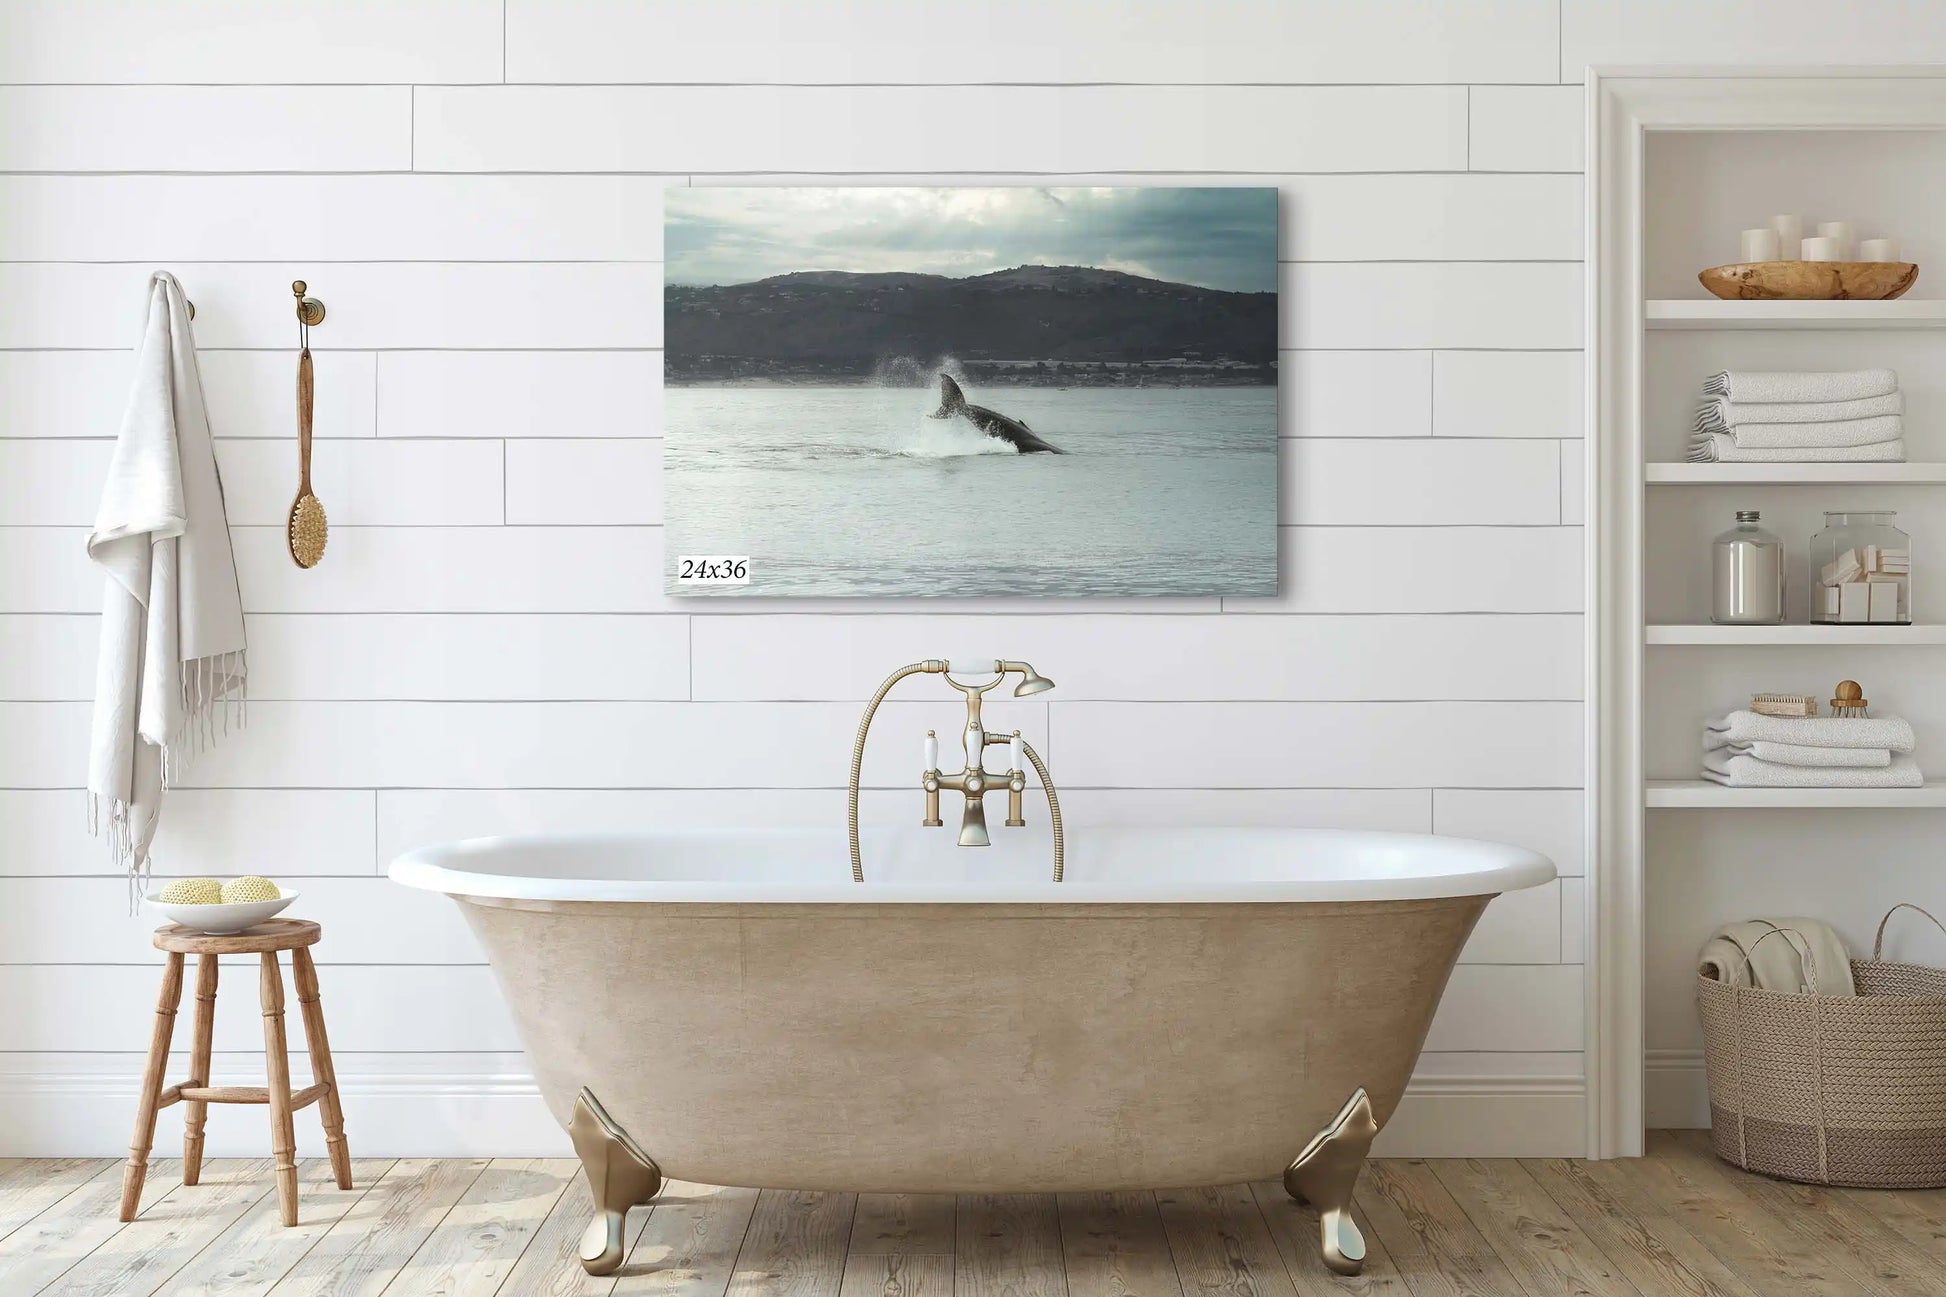 Humpback Whale Fluke as canvas wall decor 24x36-inch in bathroom